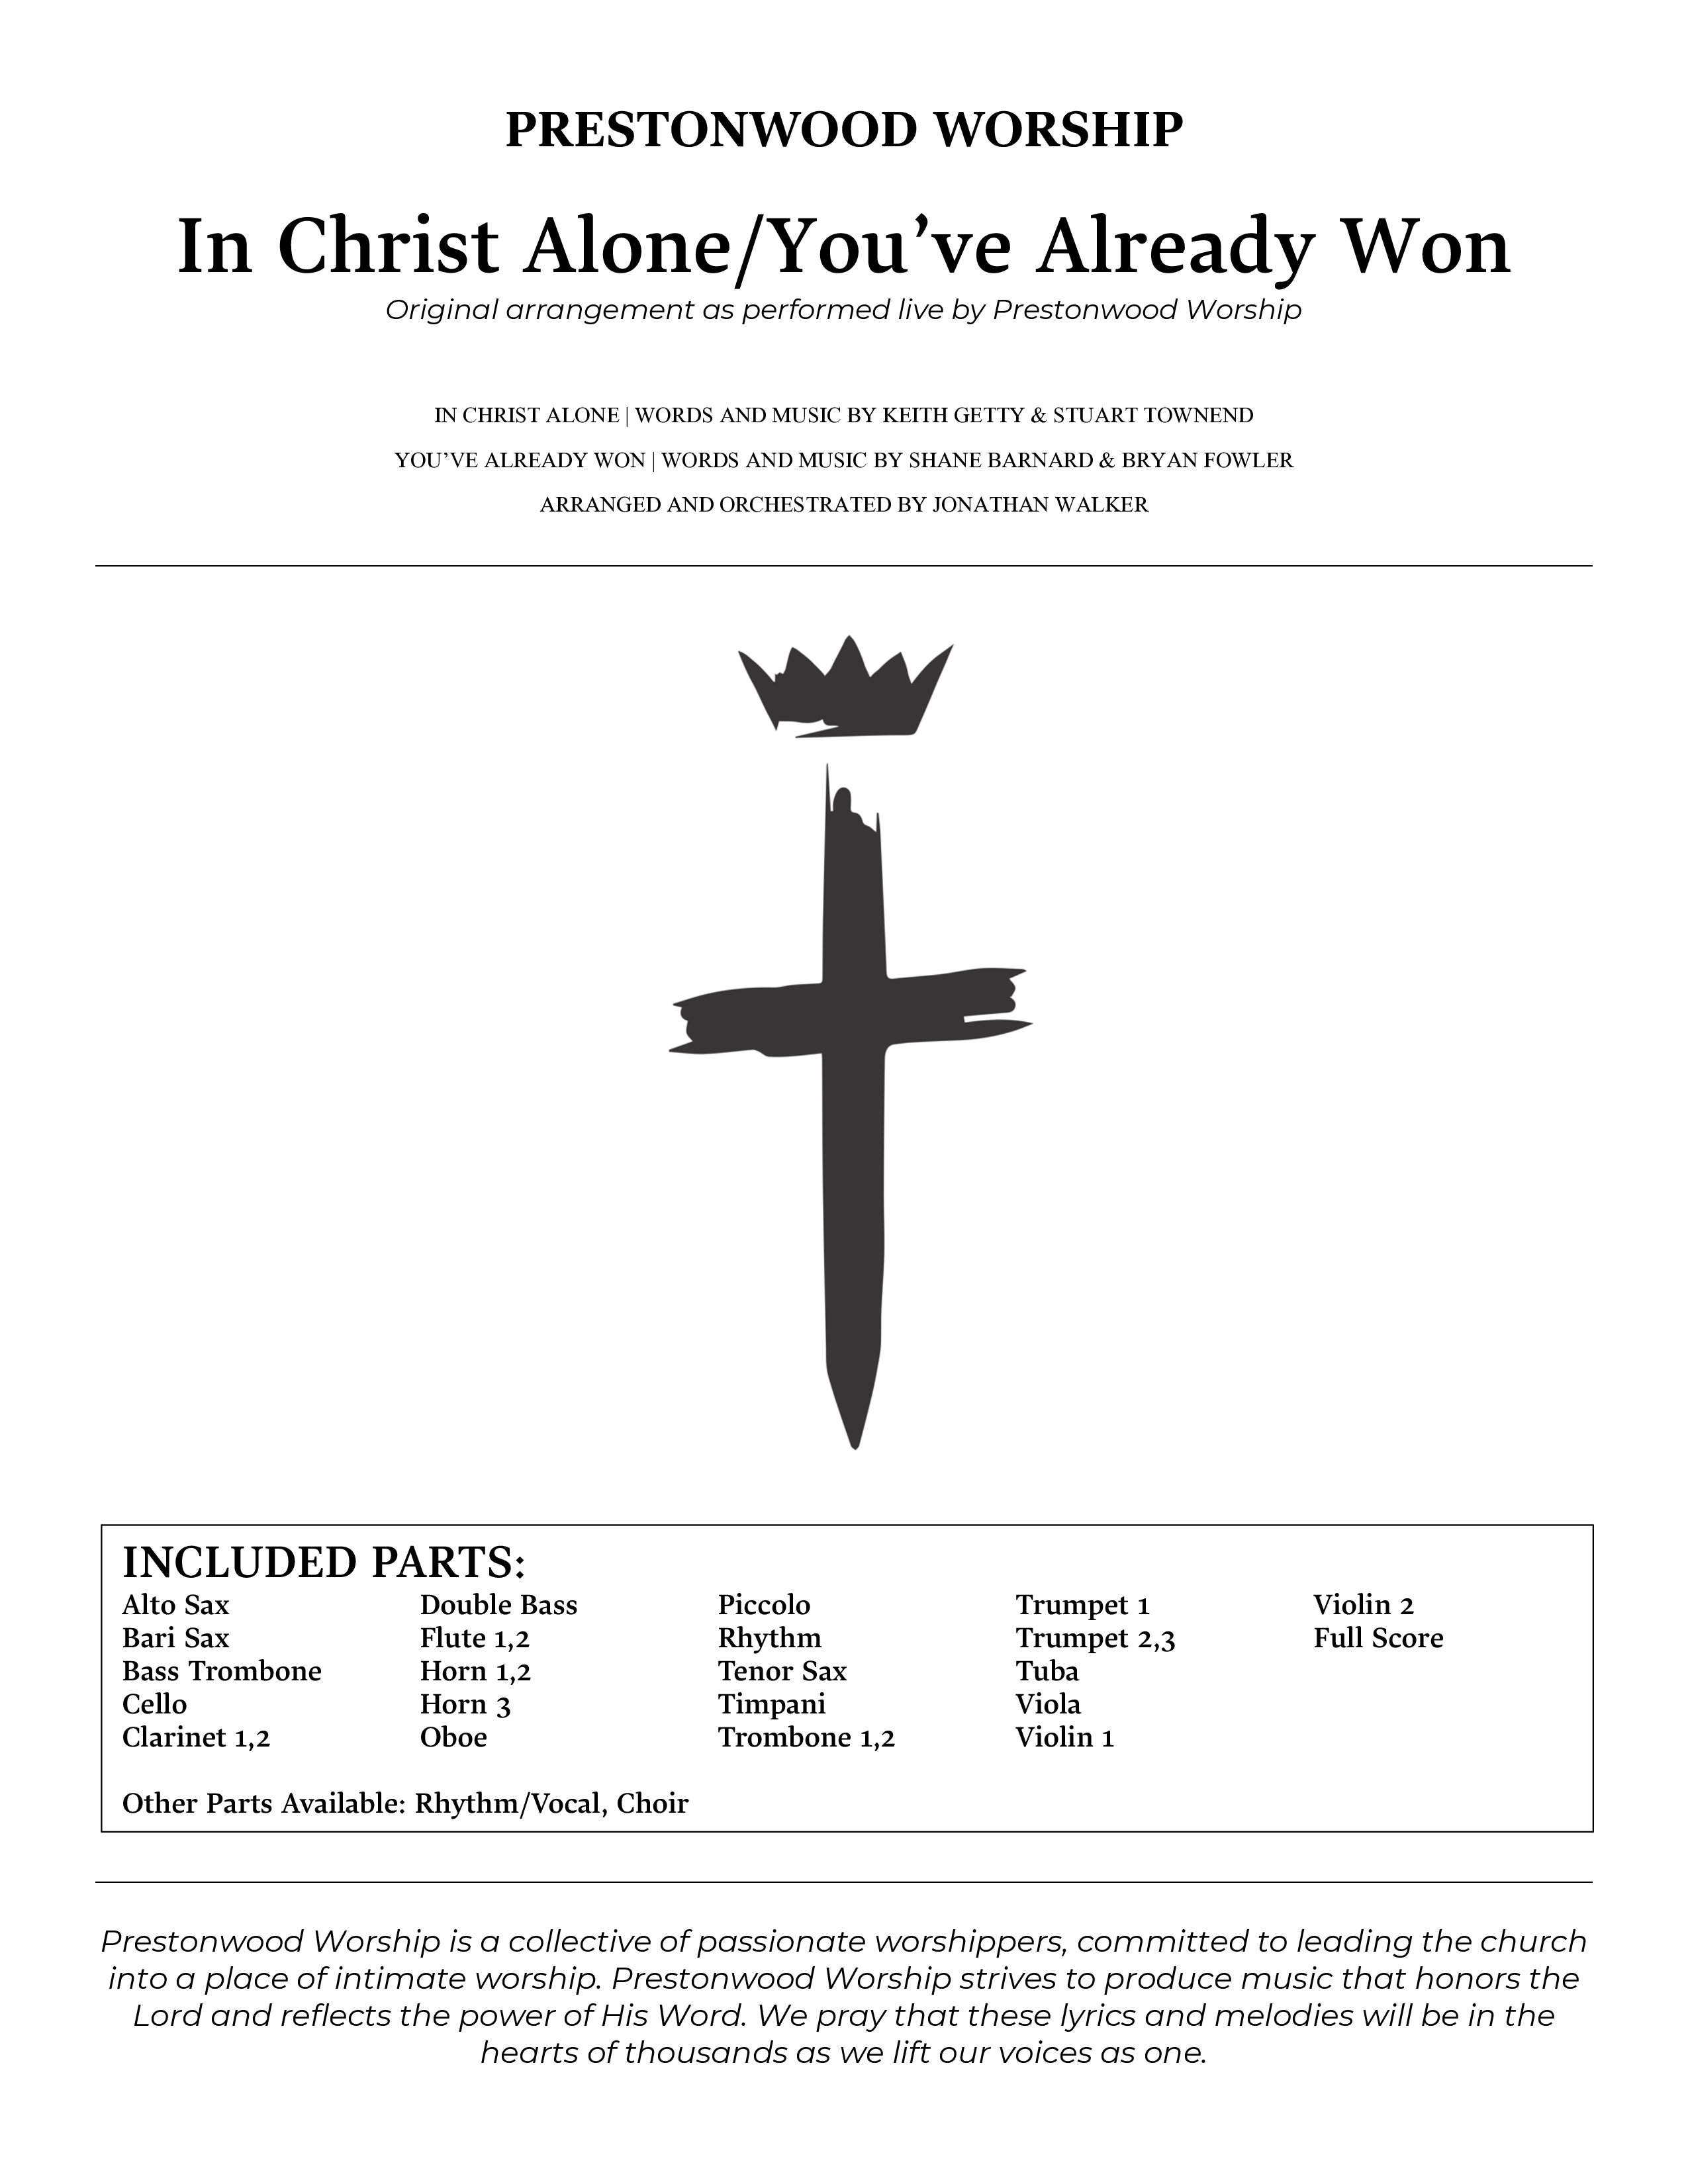 In Christ Alone with You've Already Won (Choral Anthem SATB) Cover Sheet (Prestonwood Choir / Prestonwood Worship / Arr. Jonathan Walker)